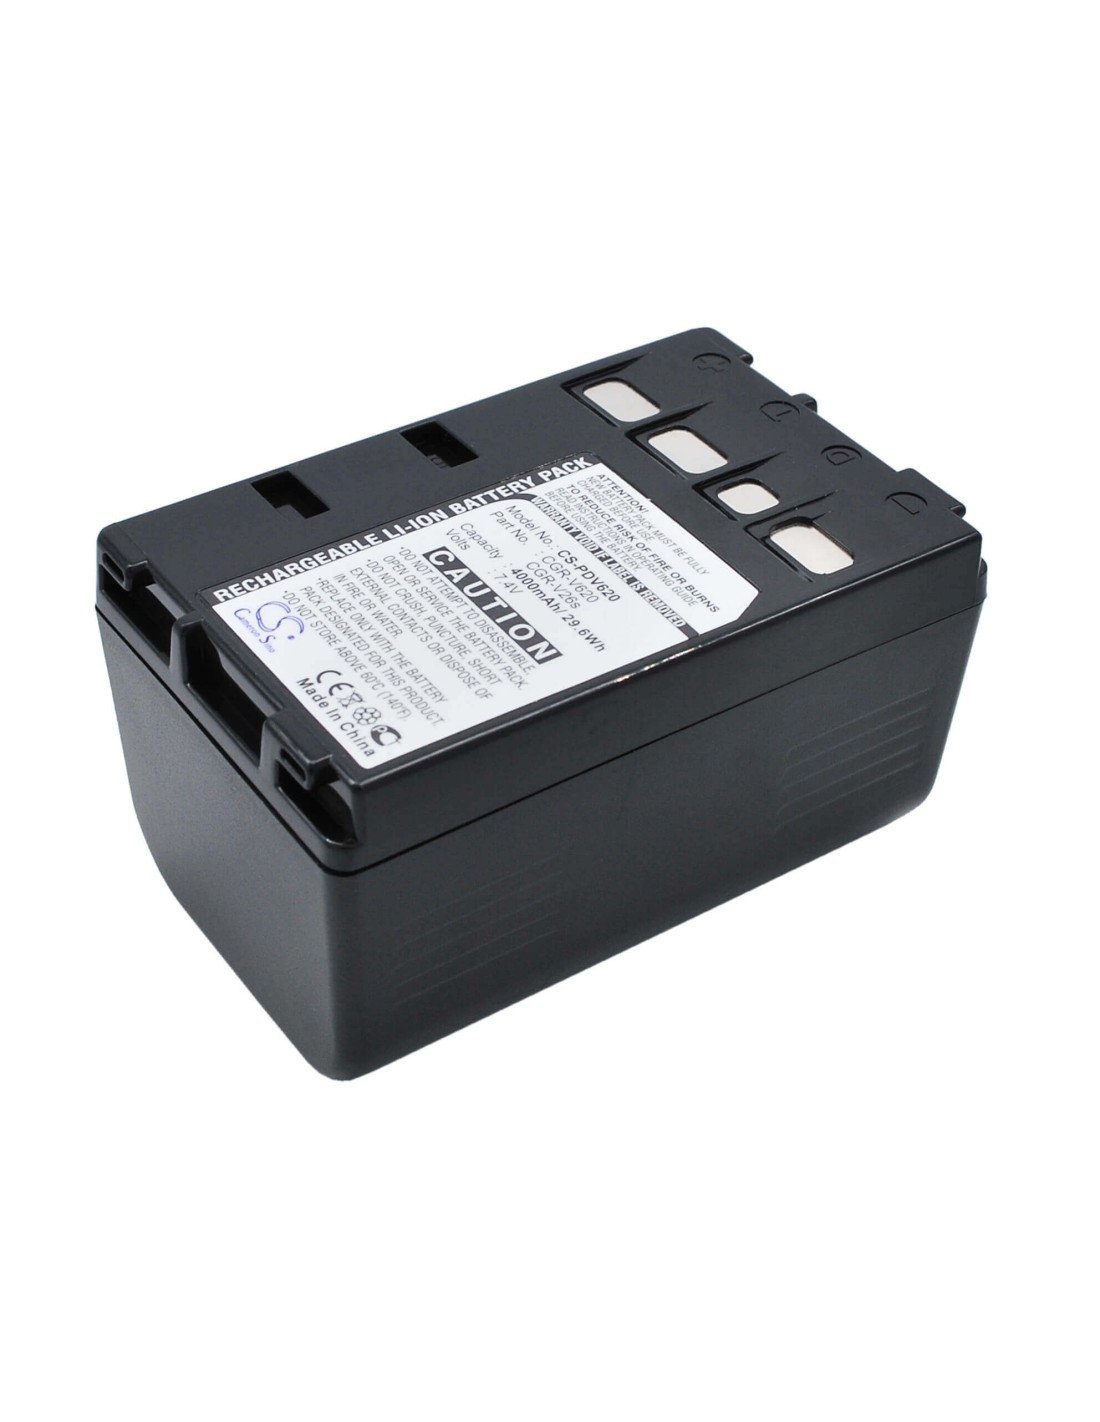 Battery for Panasonic Nvrs7, Nvrx14, Nvrx17, Nvrx18, 7.4V, 4000mAh - 29.60Wh